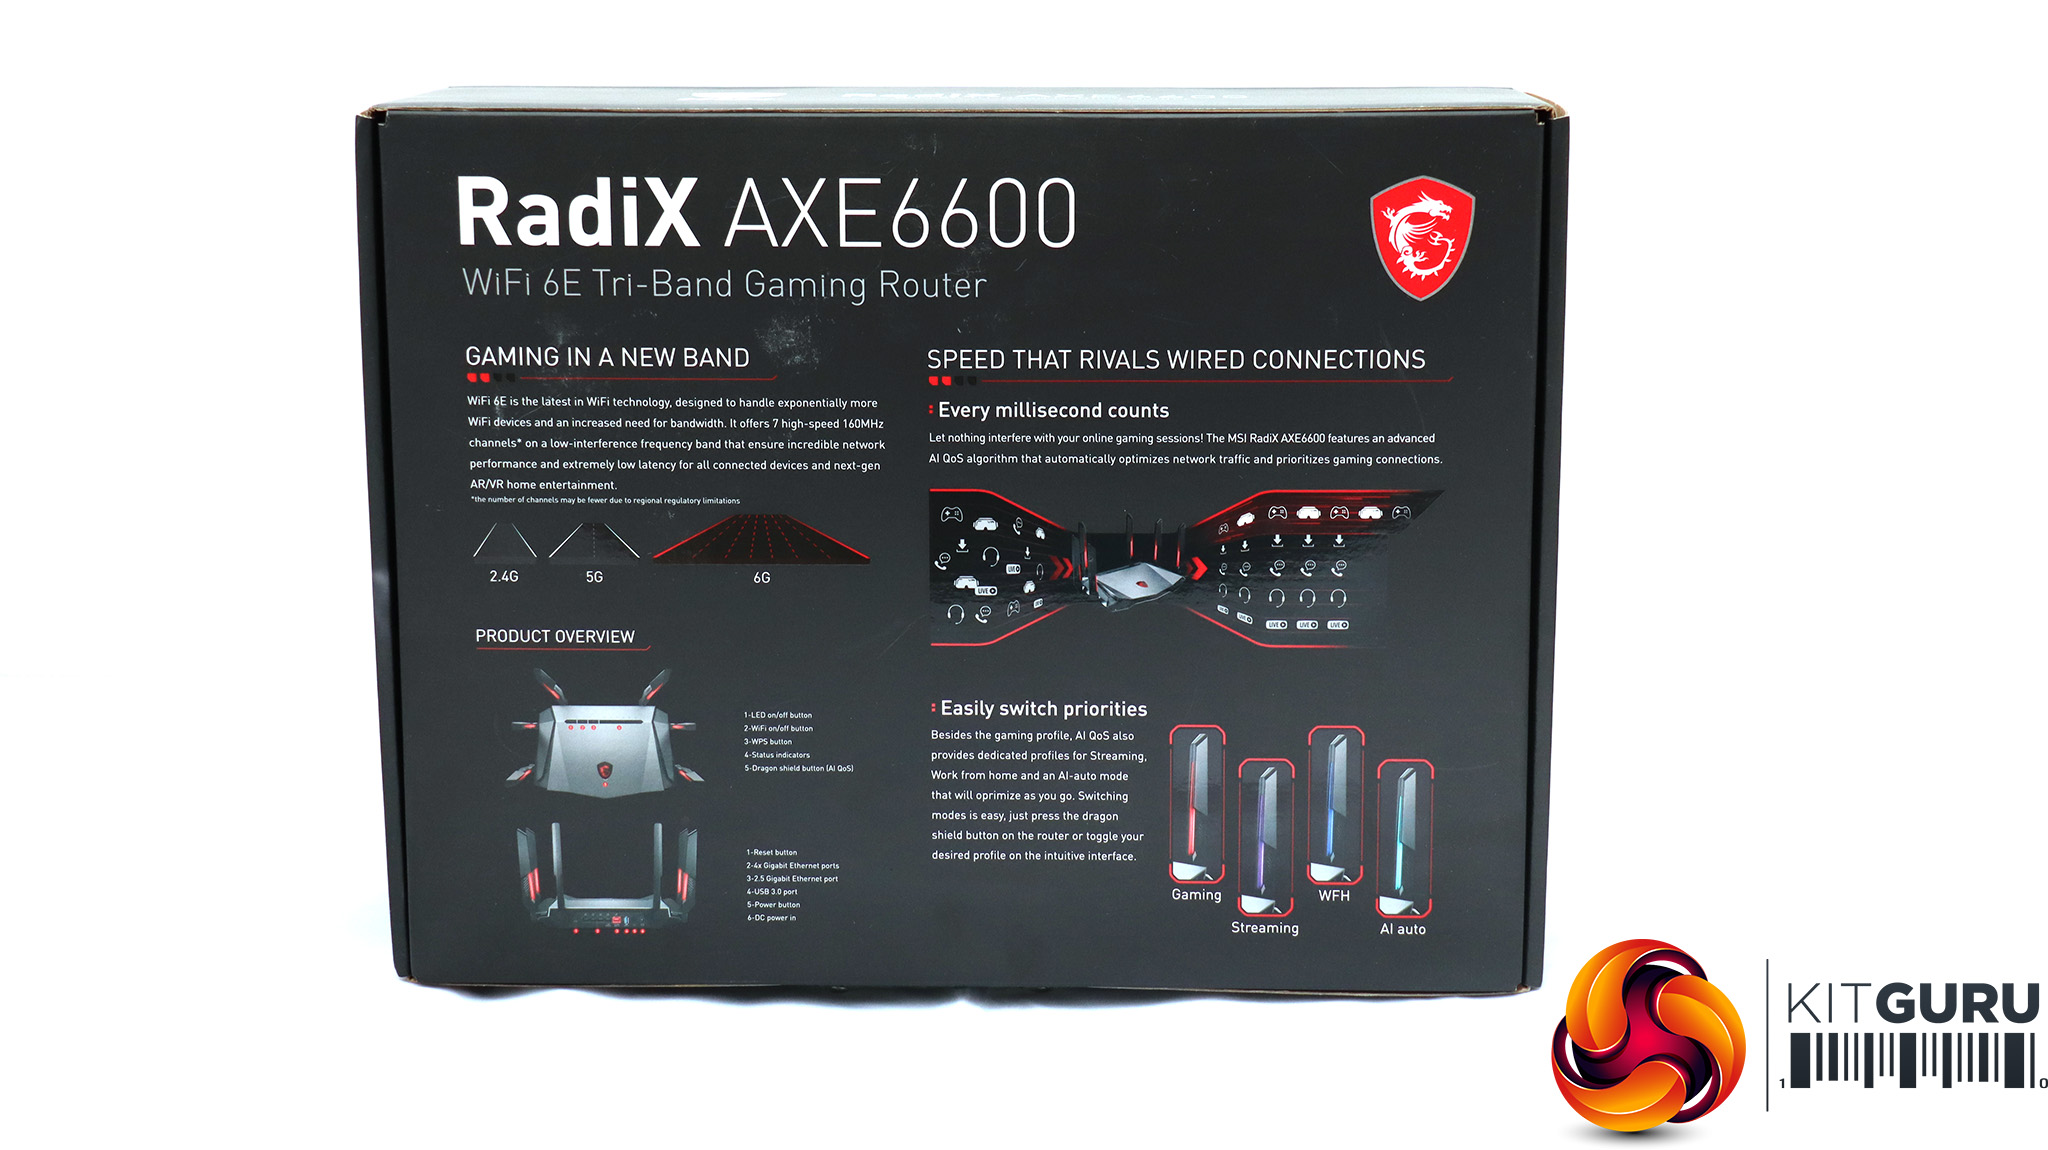 MSI RadiX AXE6600 Review: A Cool 6E Router